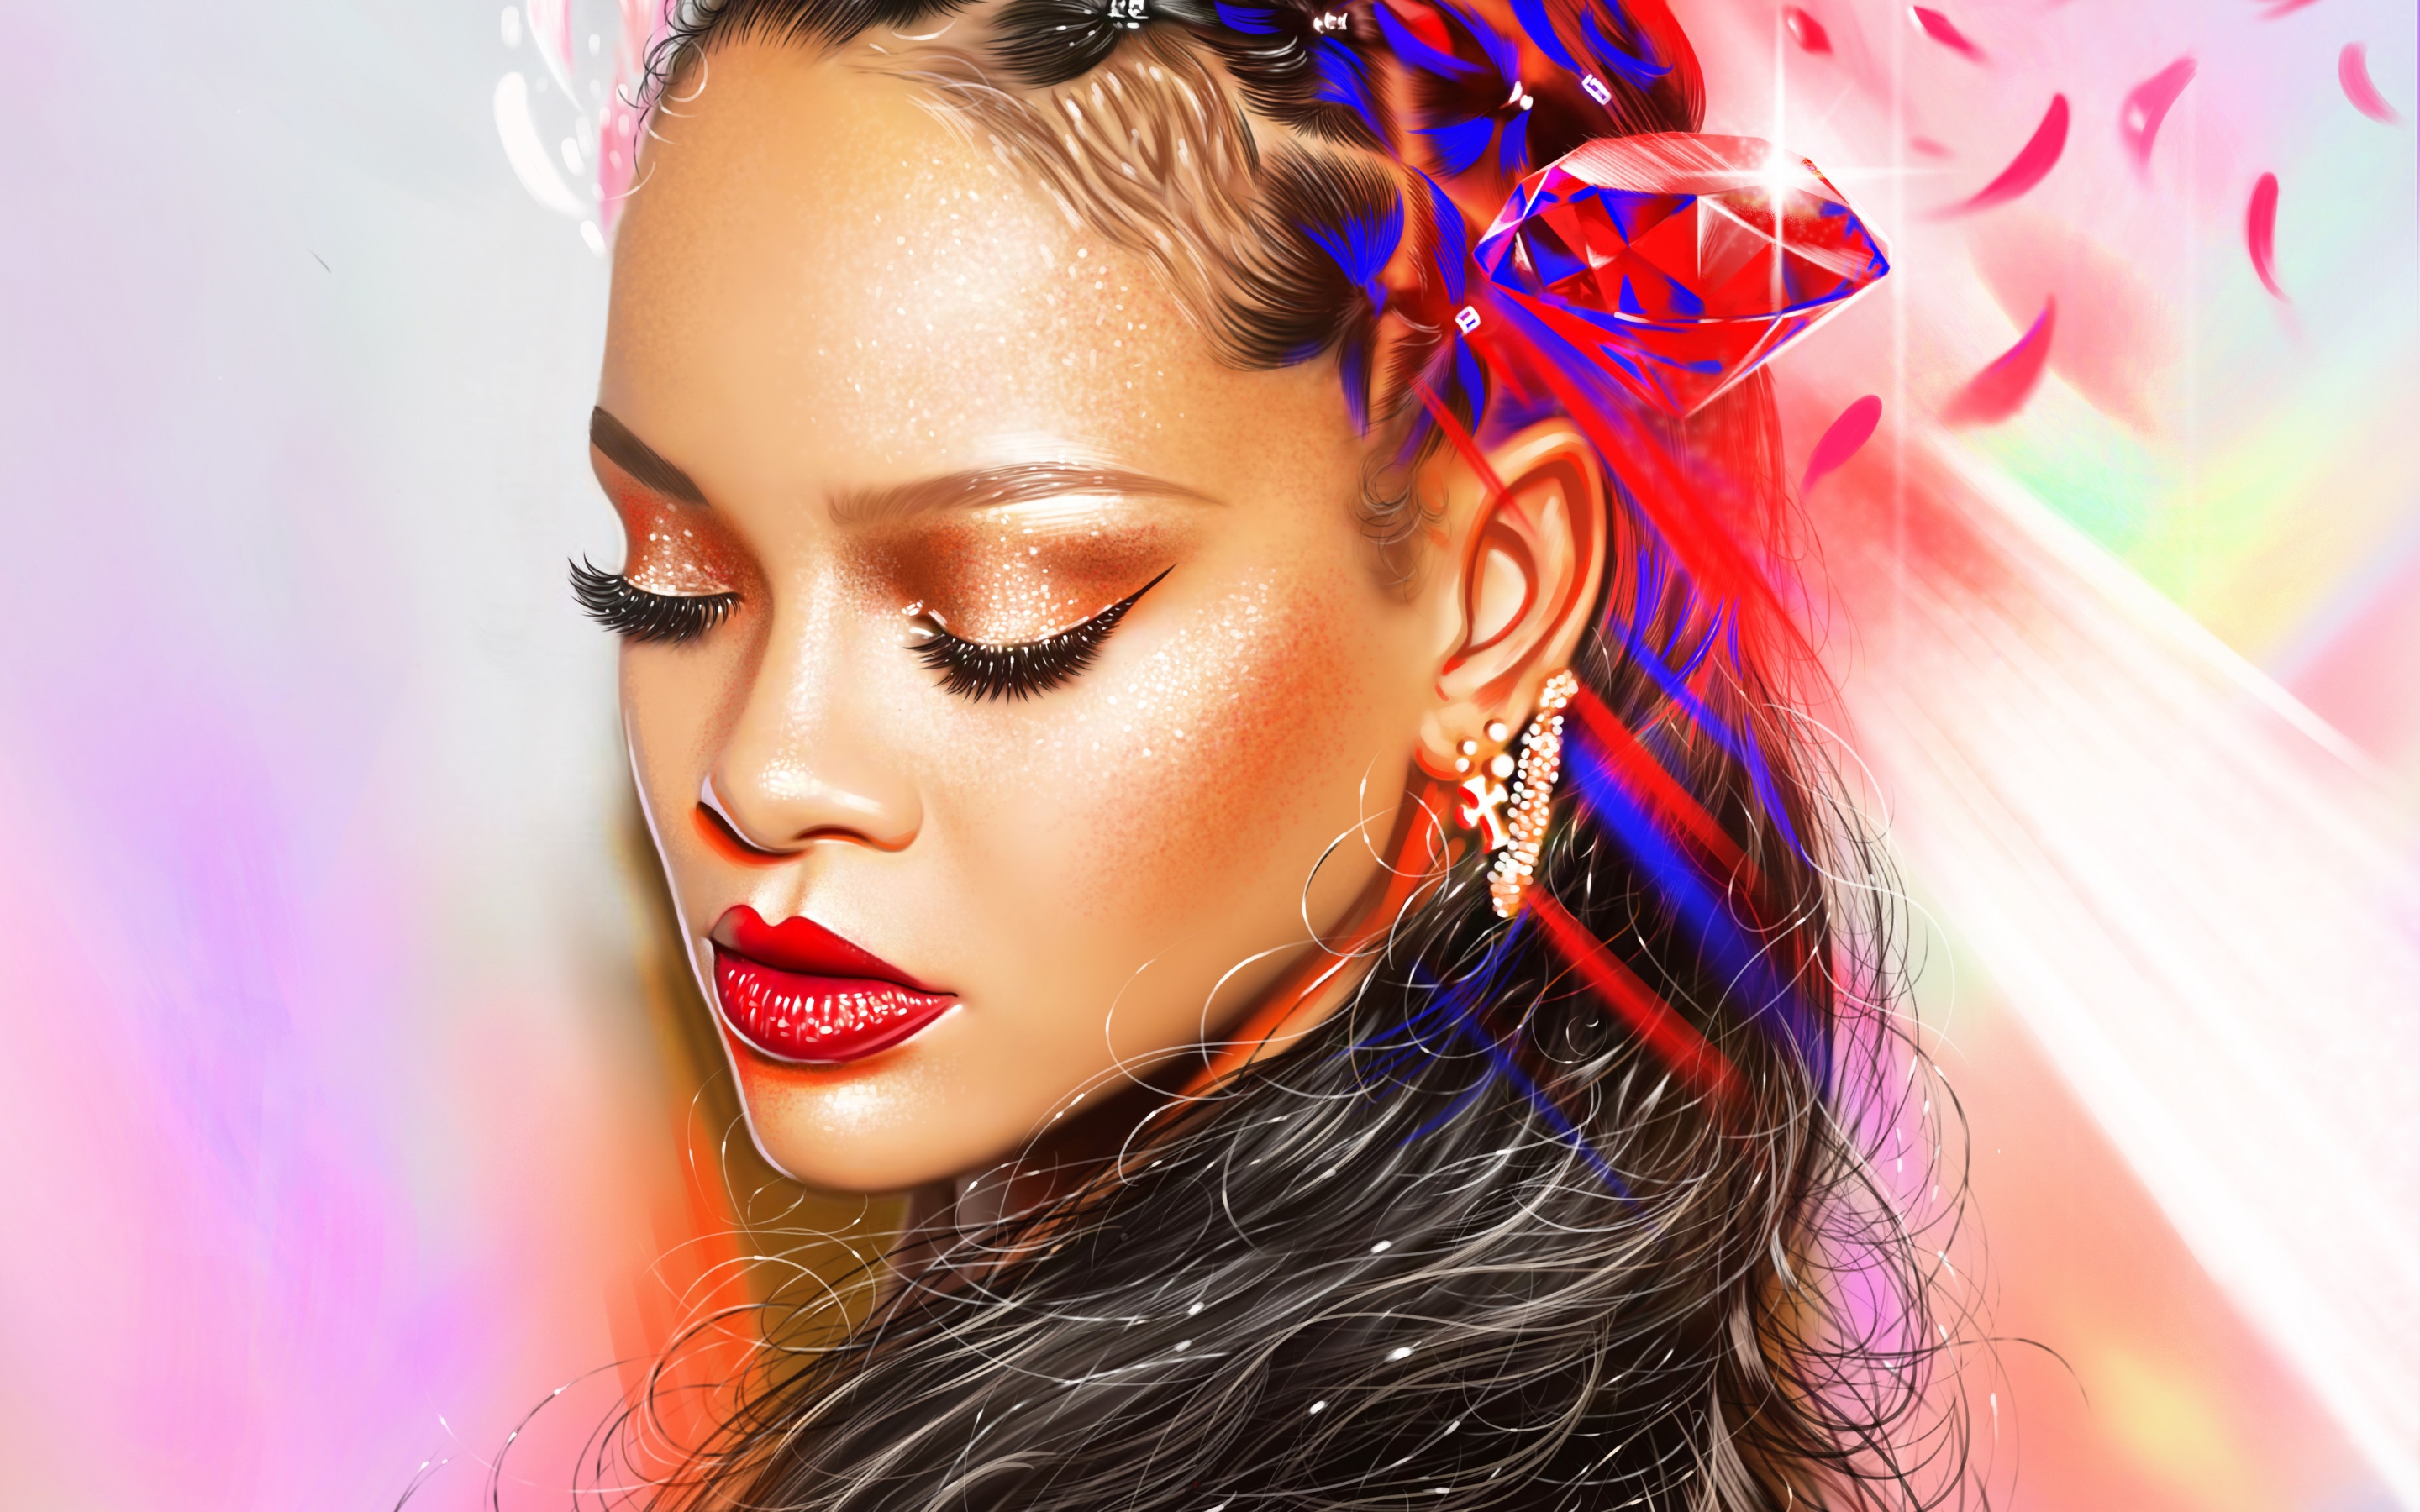 Rihanna Wallpaper HD - Free download and software reviews - CNET Download